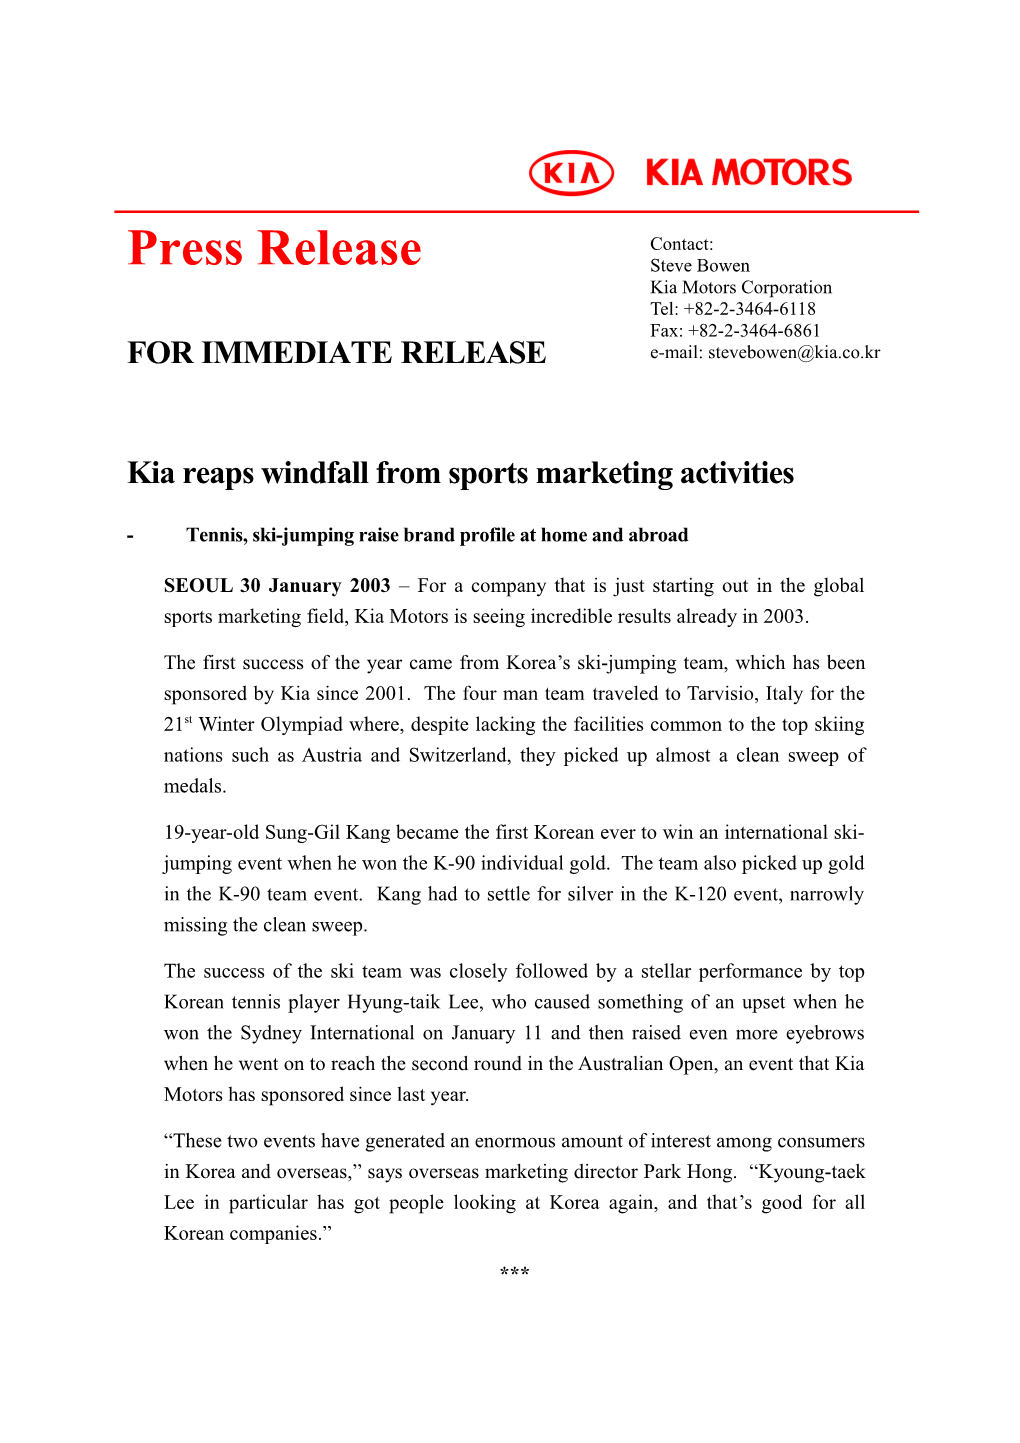 Kia Reaps Windfall from Sports Marketing Activities